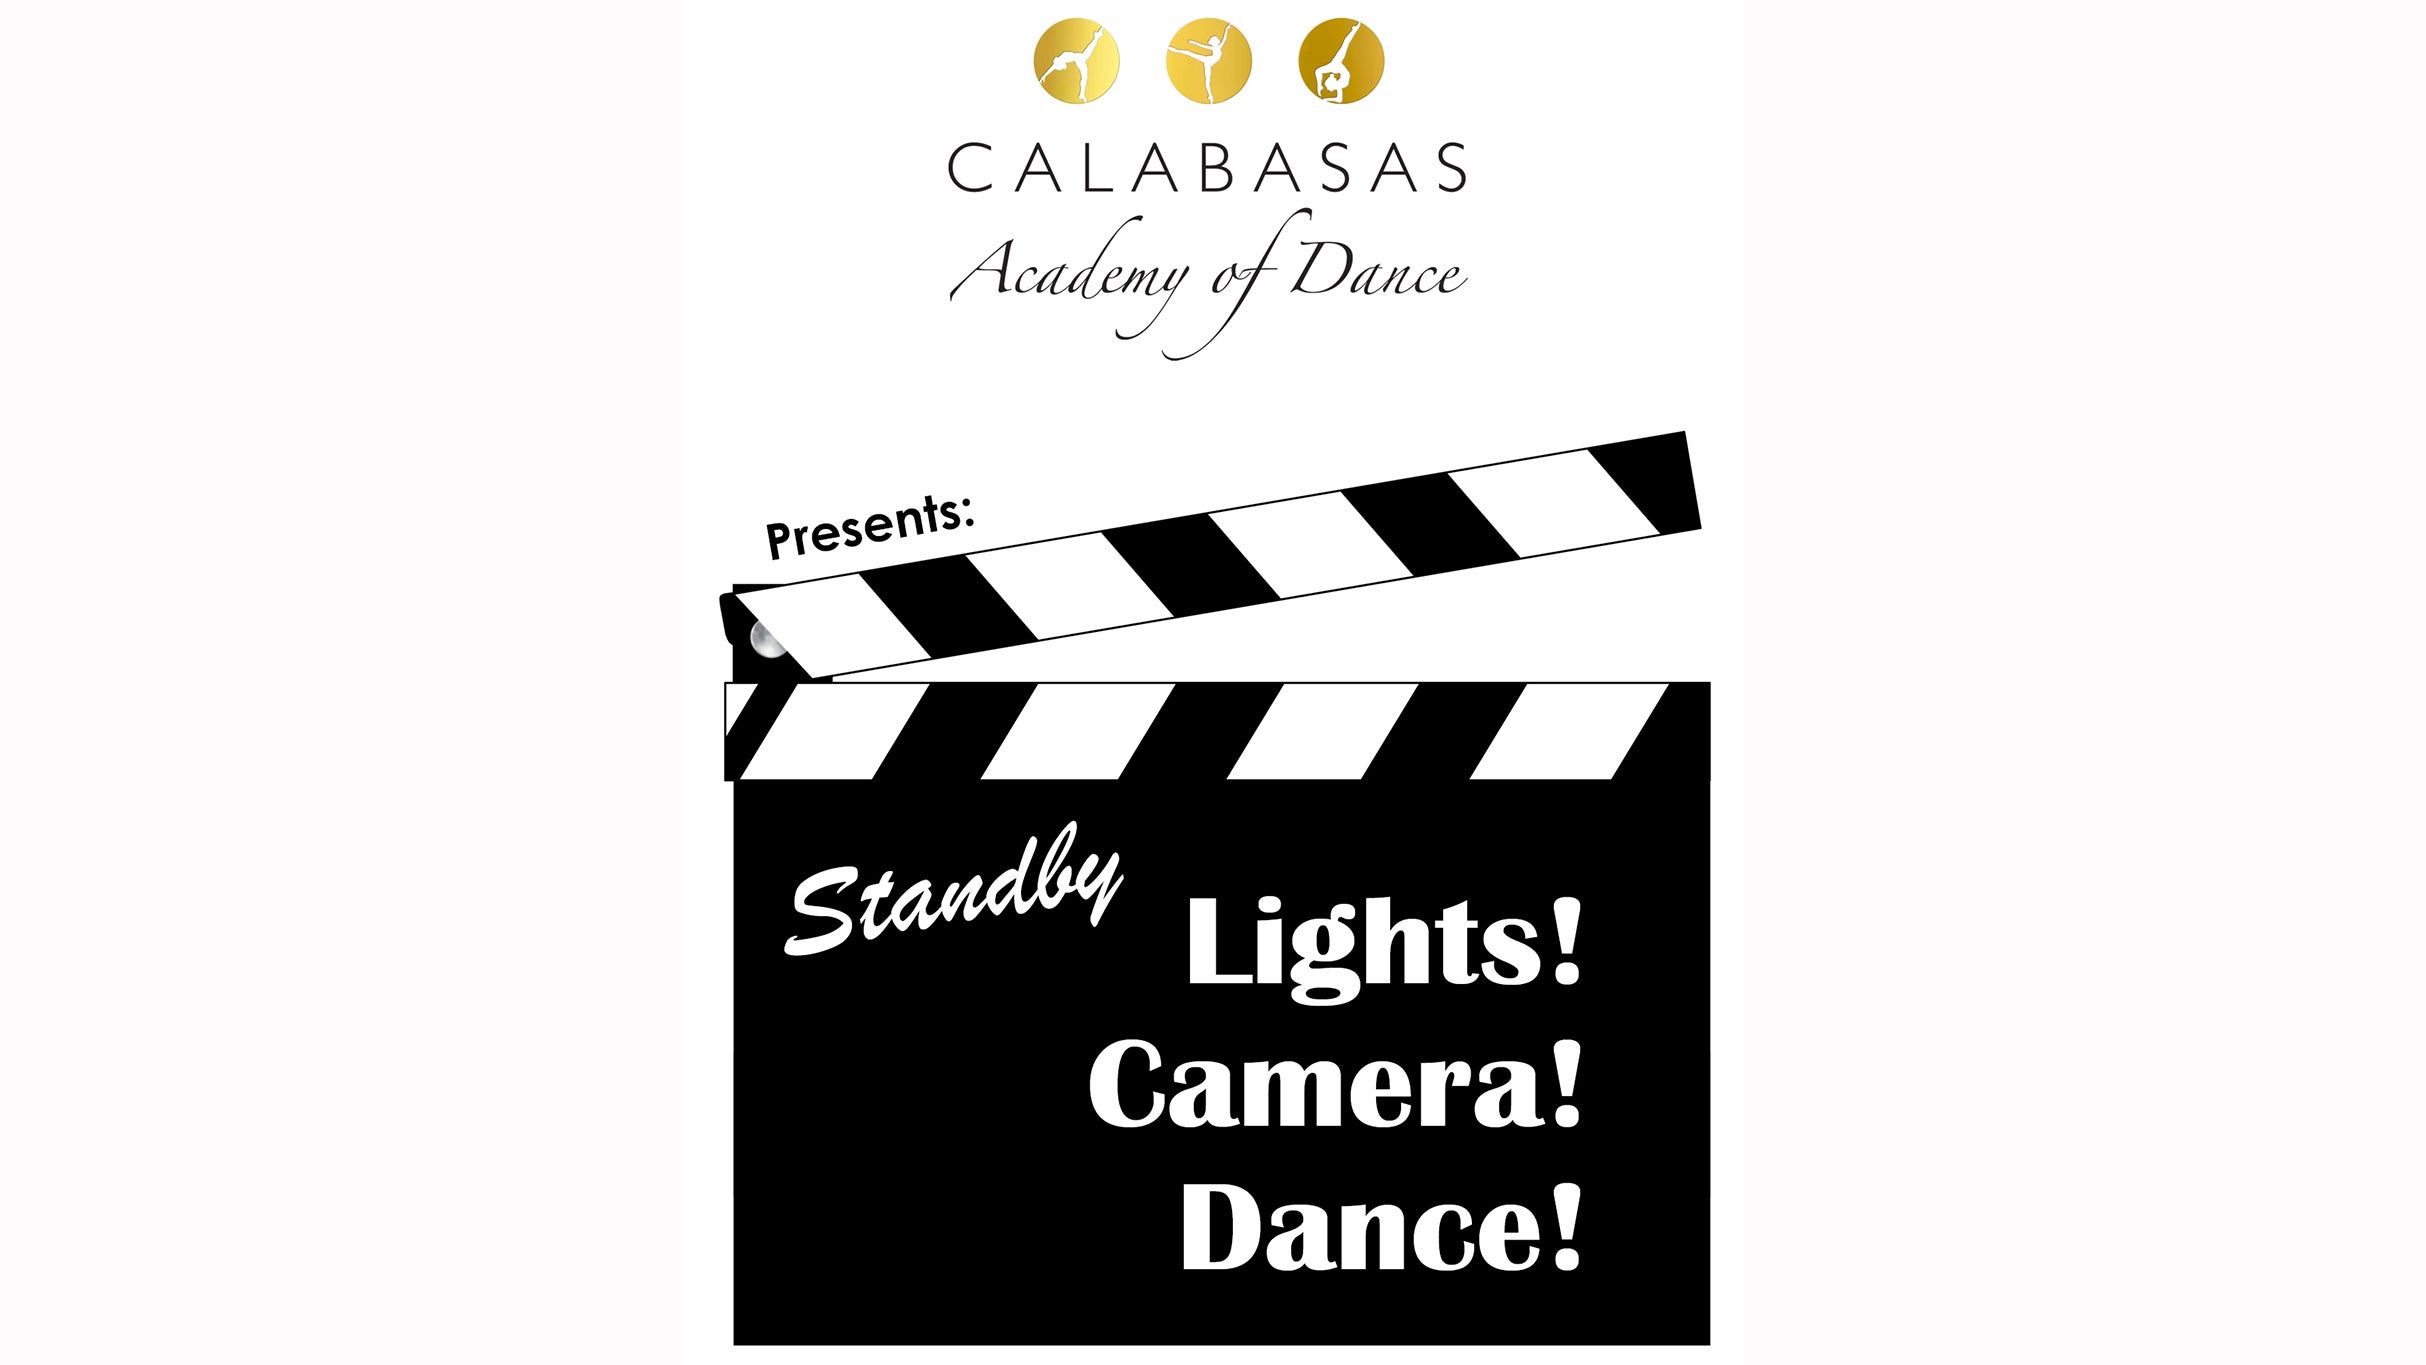 Calabasas Academy Of Dance presents Lights, Camera, Dance!